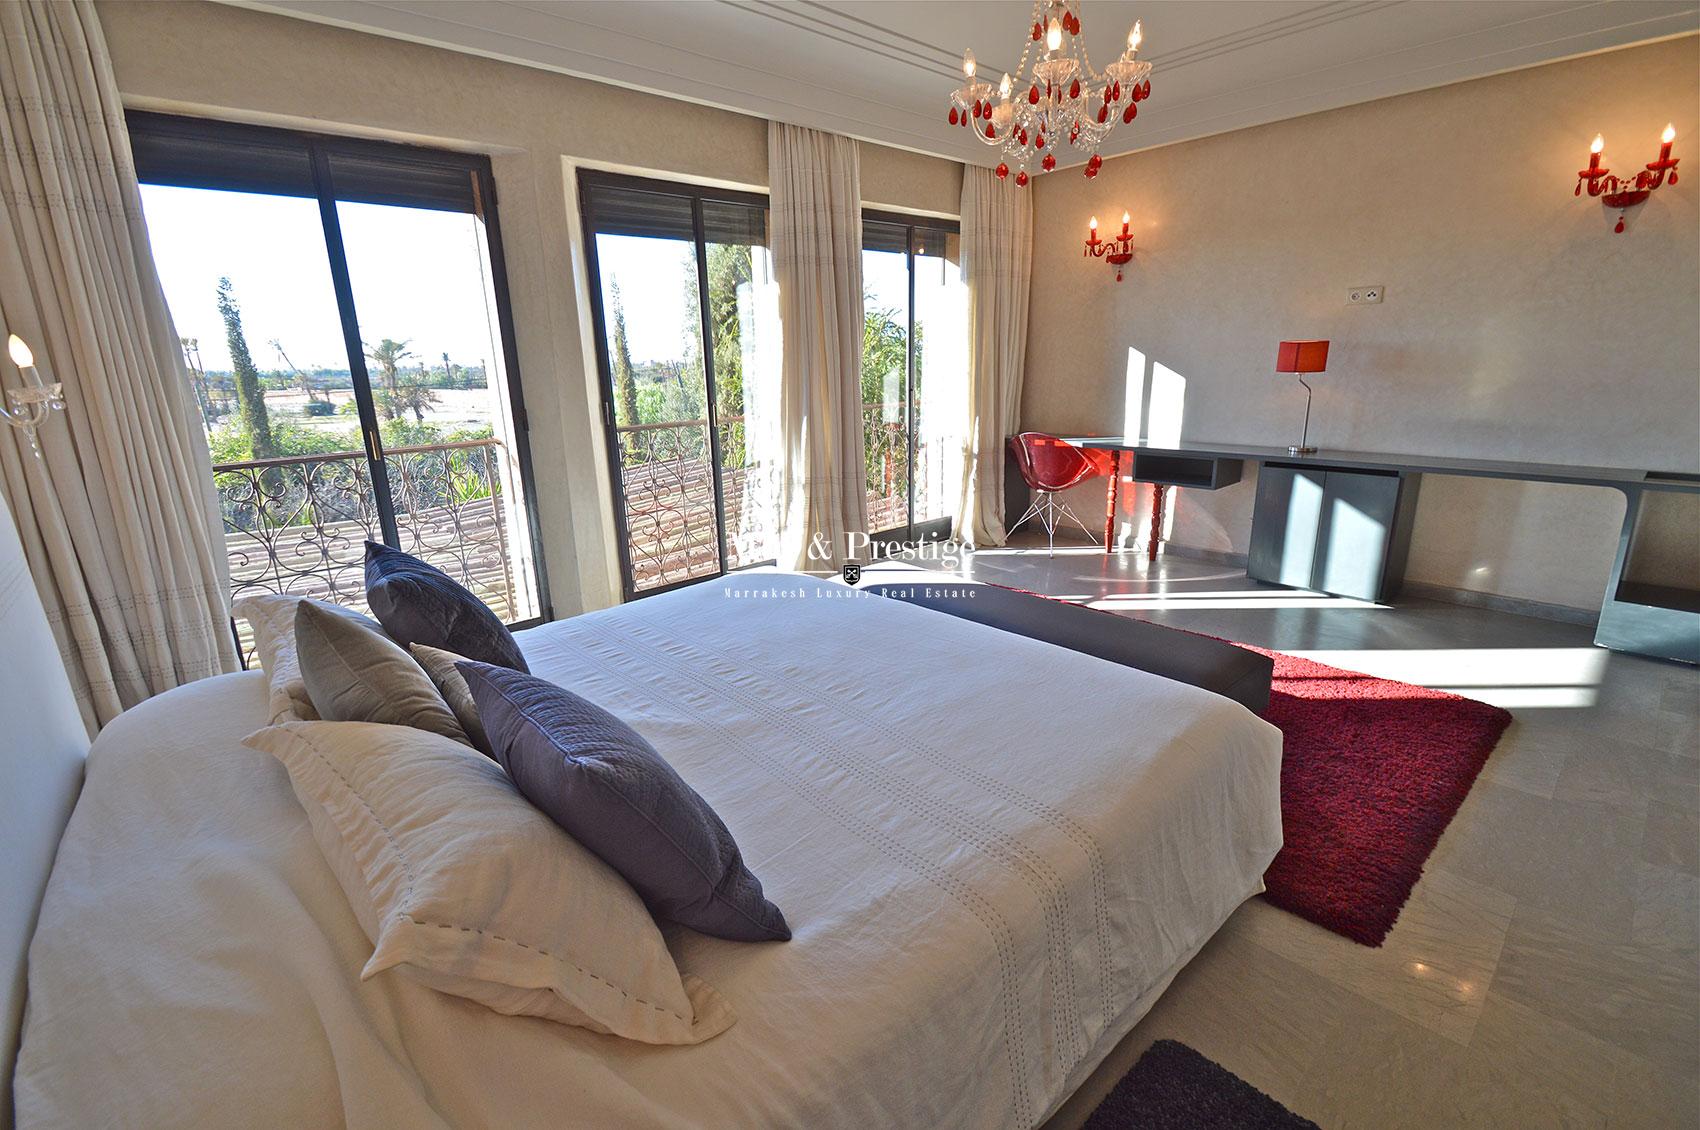 Immobilier de luxe a Marrakech